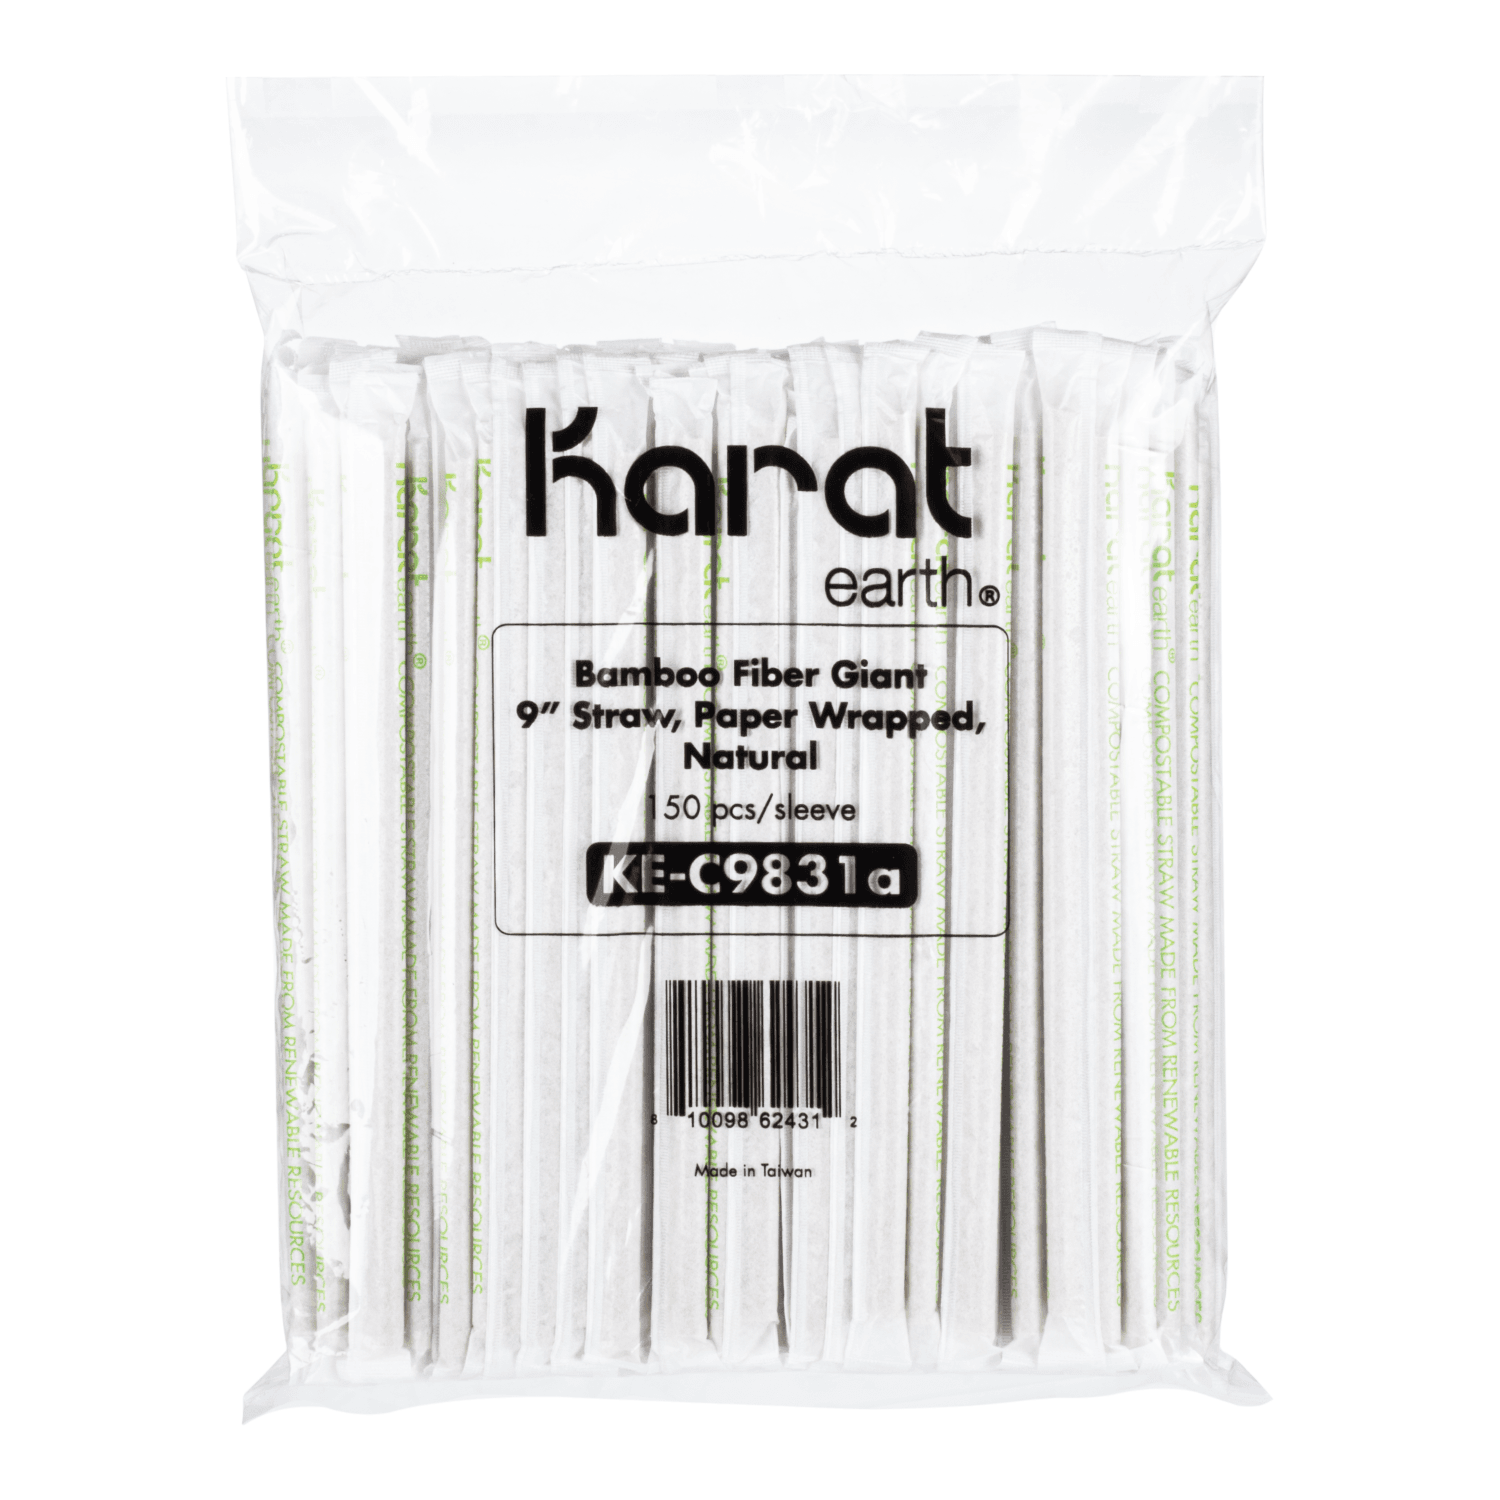 Karat Earth Flat Cut Bamboo Fiber Giant 9” Straws in paackaging